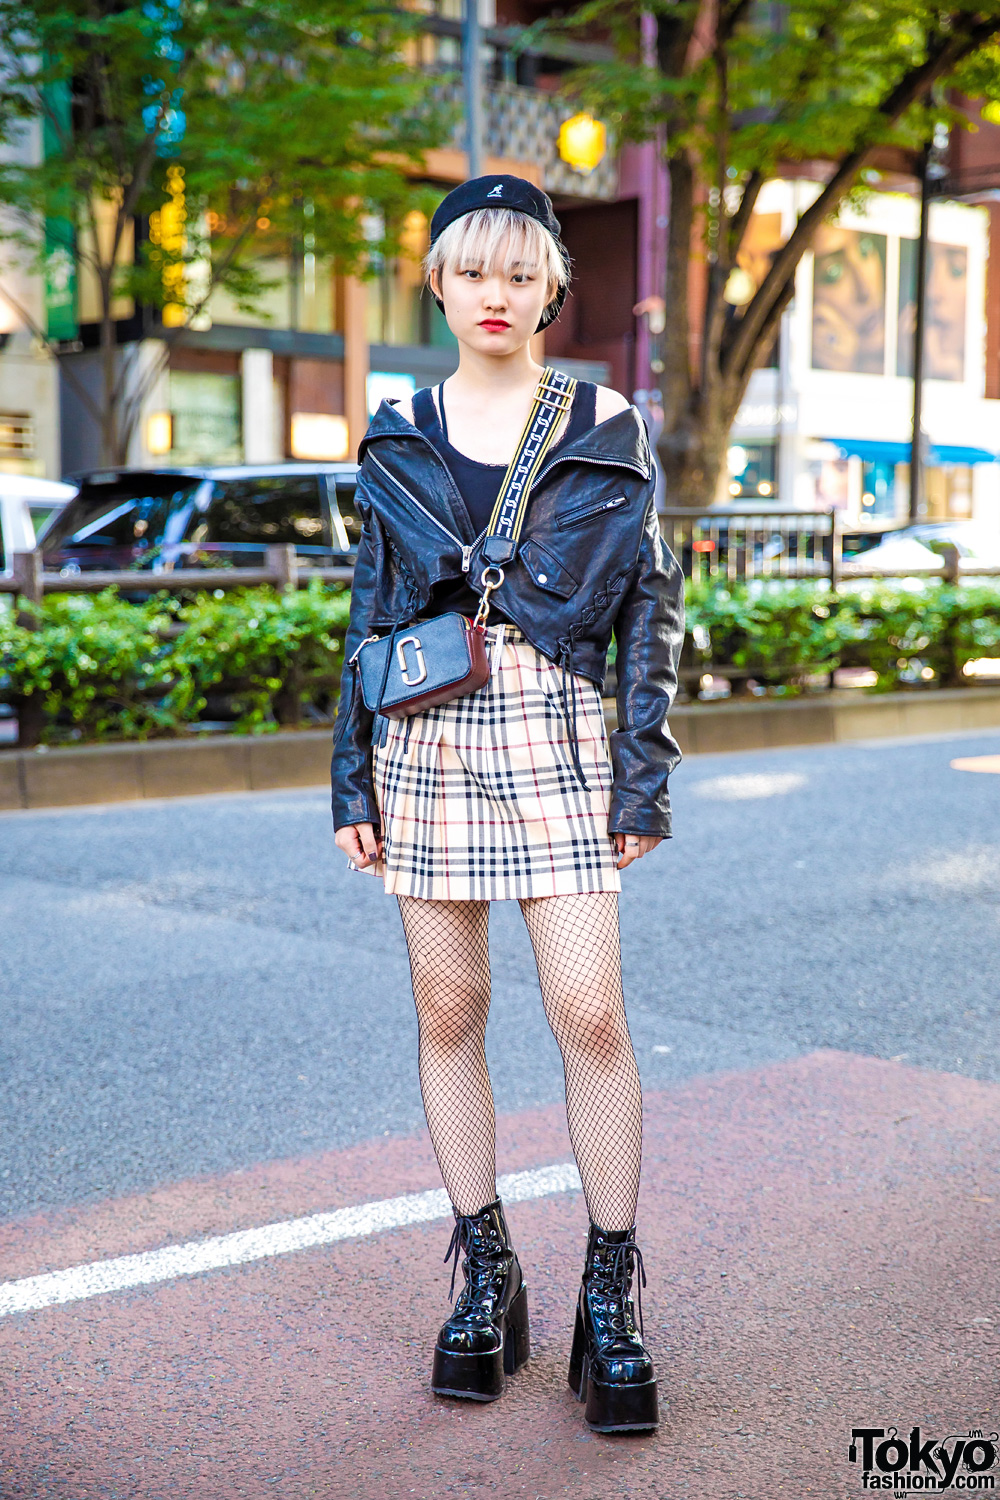 10 Kawaii outfit street snaps from Tokyo Fashion - TokyoTreat Blog